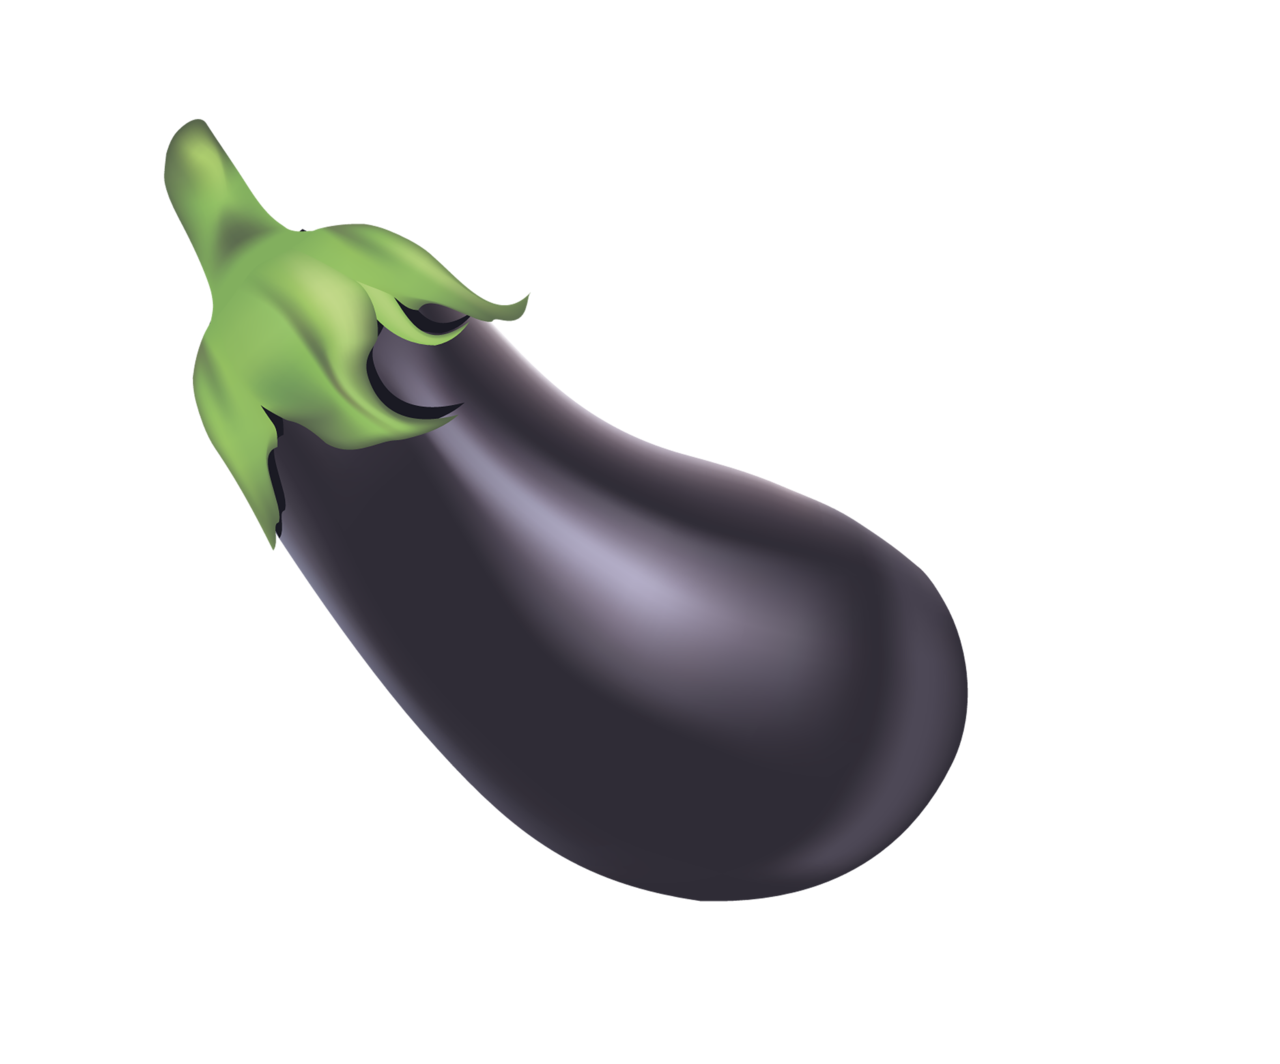 Eggplant PNG imagesdownload, Eggplant PNG - Free PNG